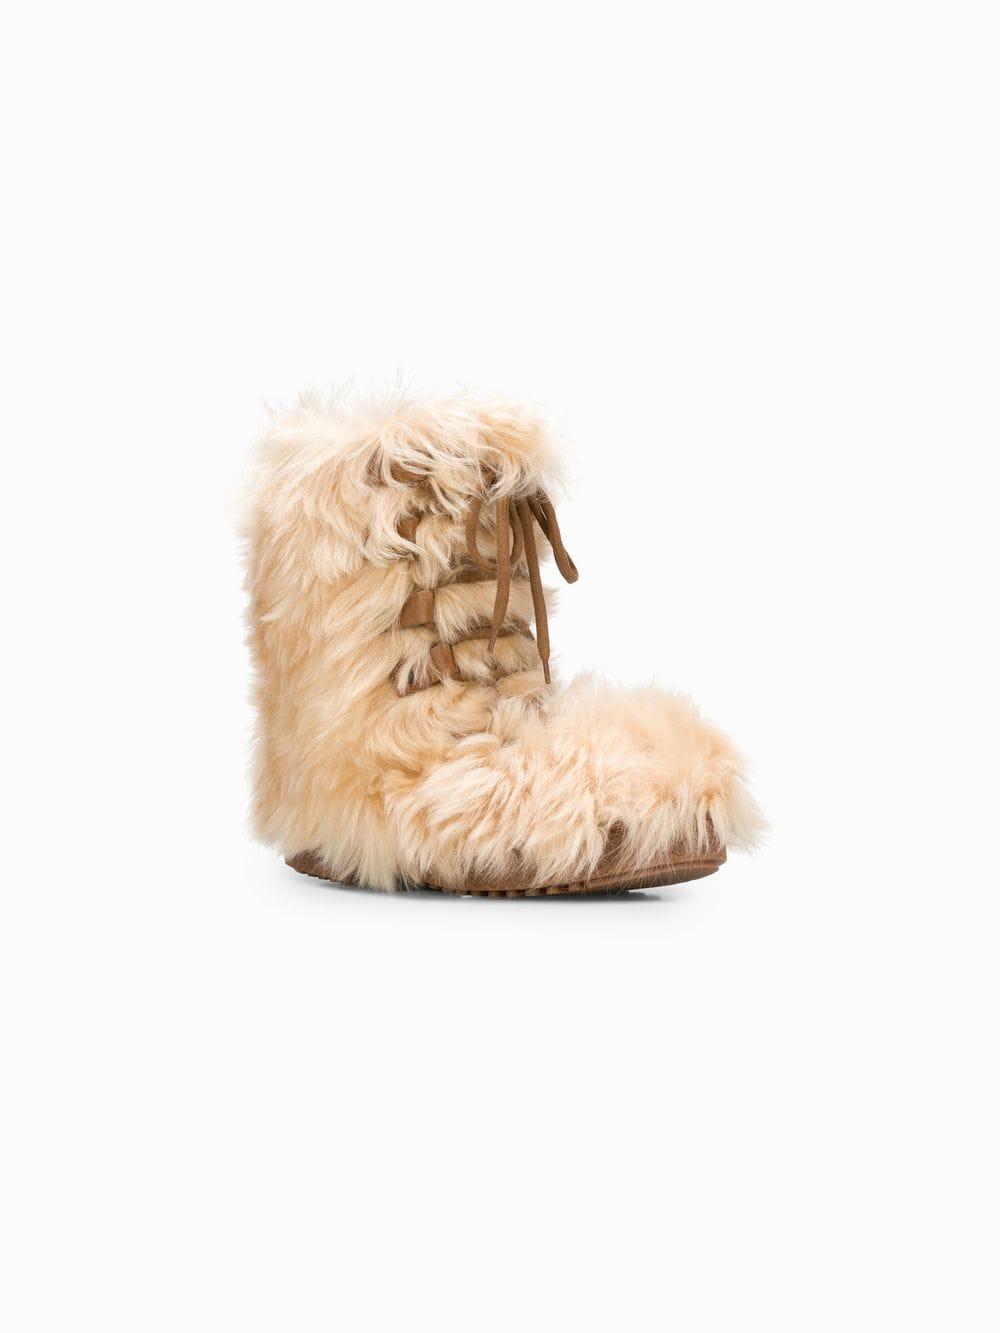 Buy > brown fur boots > in stock